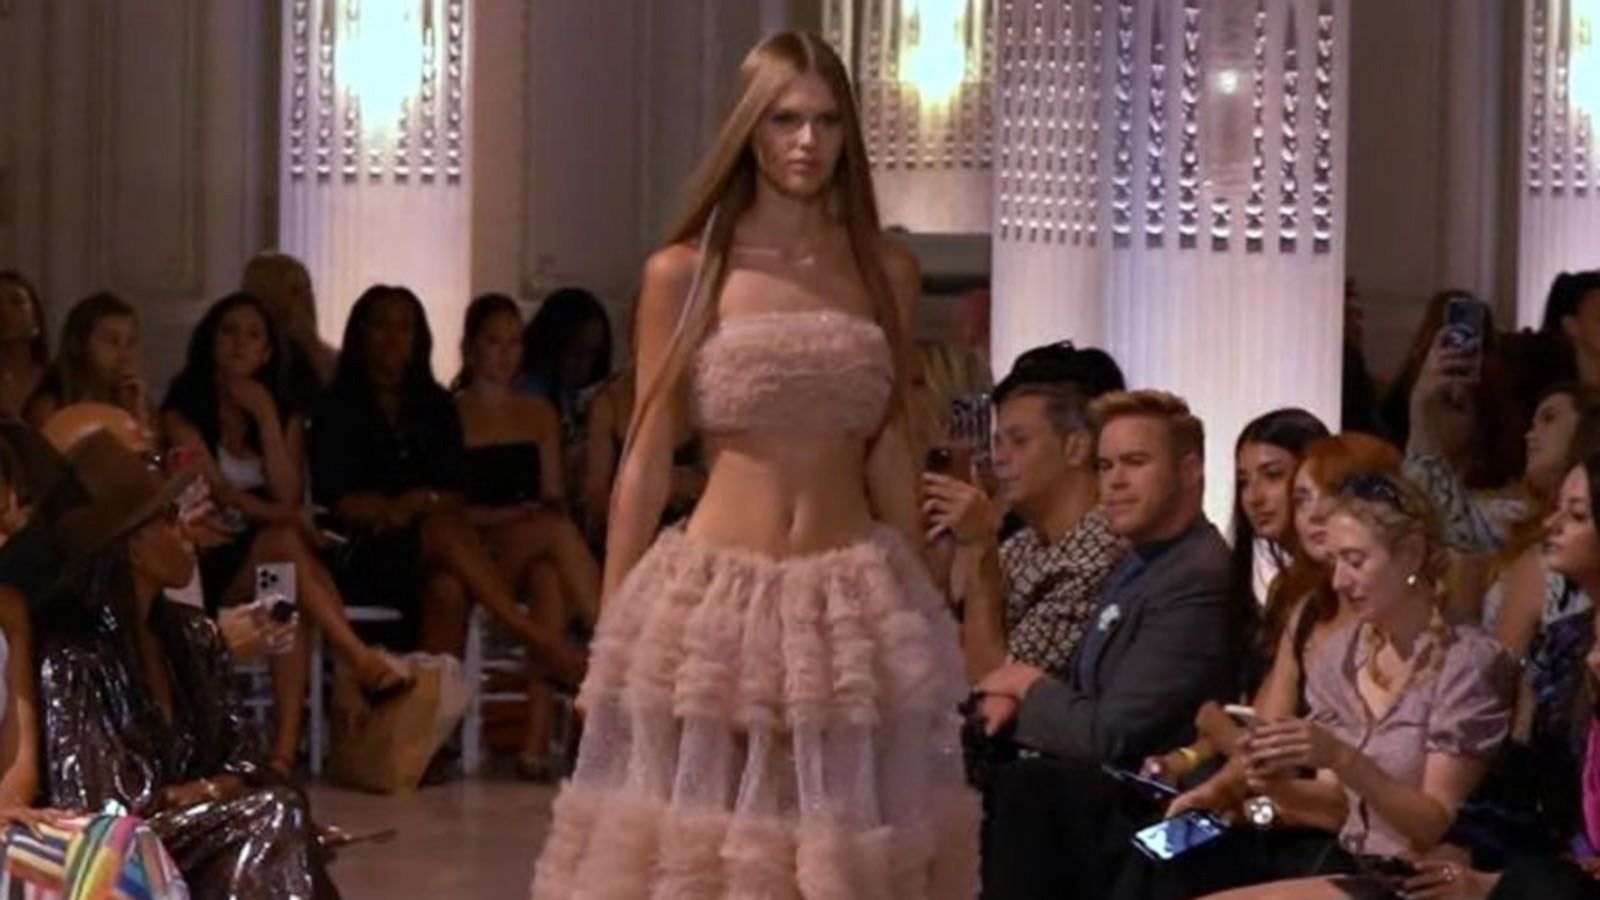 Blake Lively makes stylish appearance at New York Fashion Week